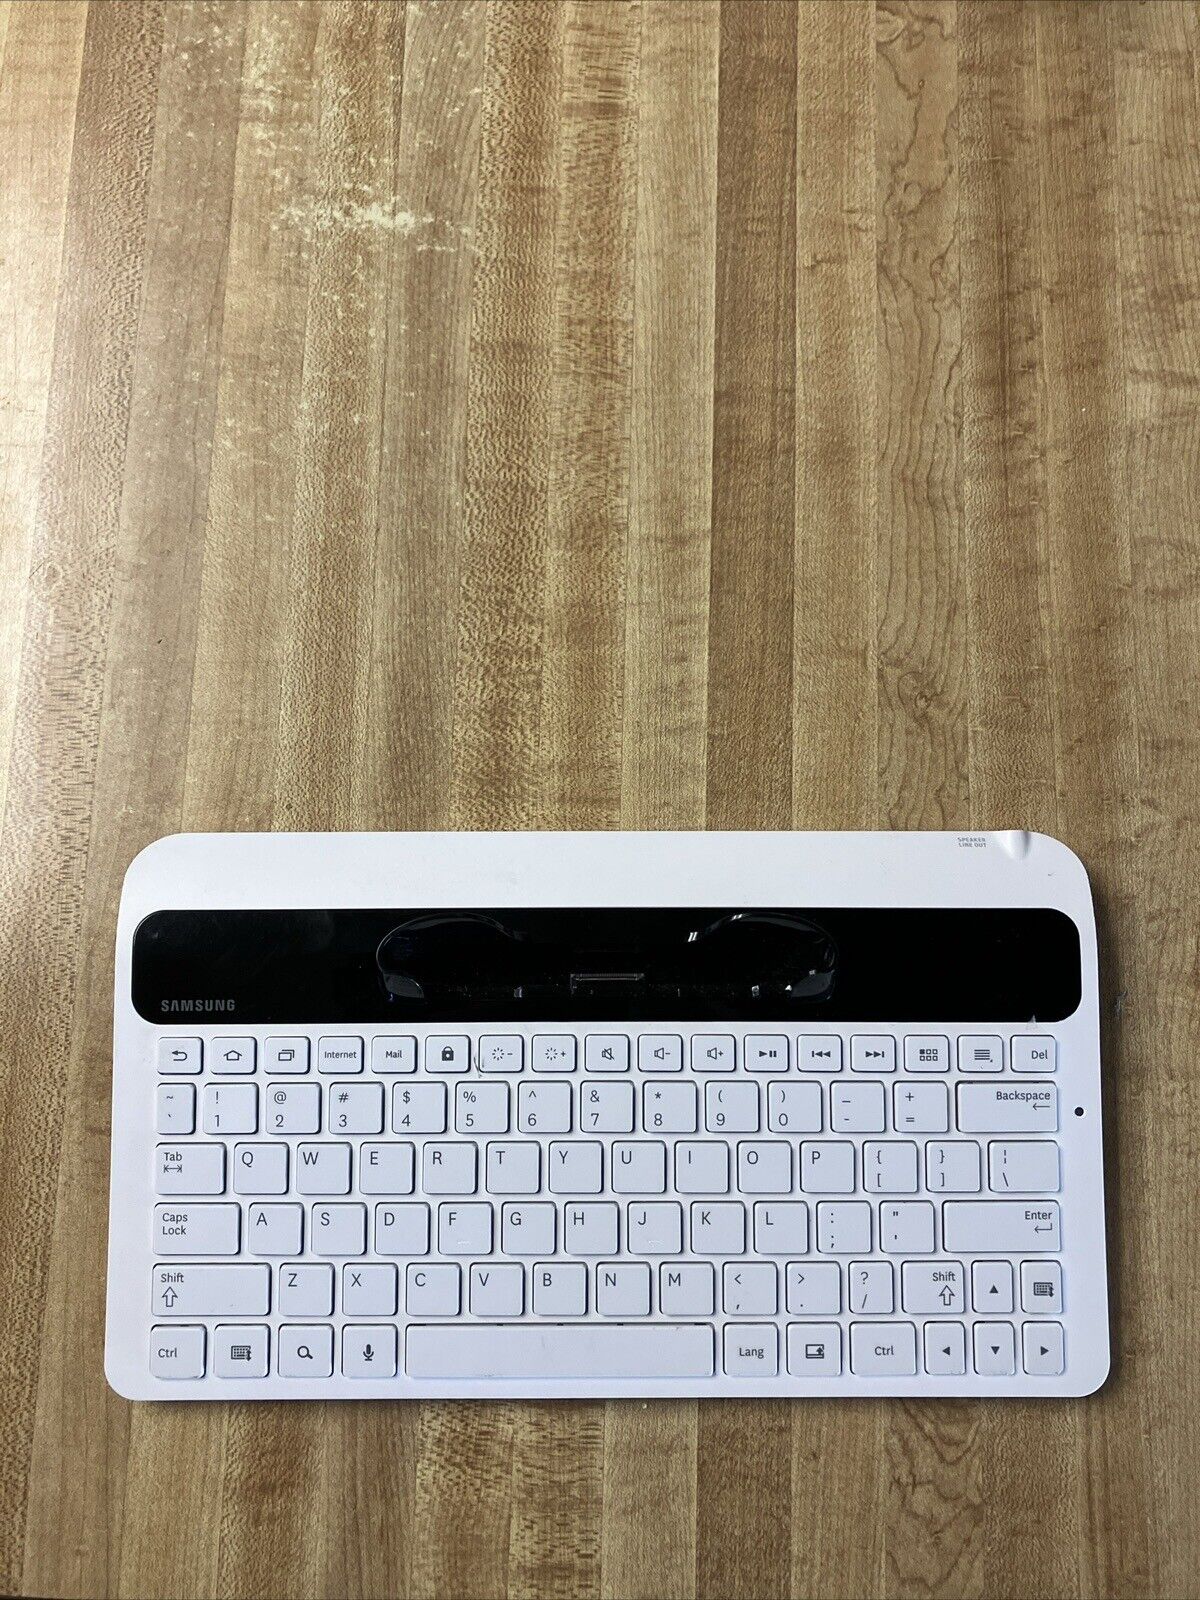 Samsung ATIV Smart PC Keyboard Dock Station Clavier